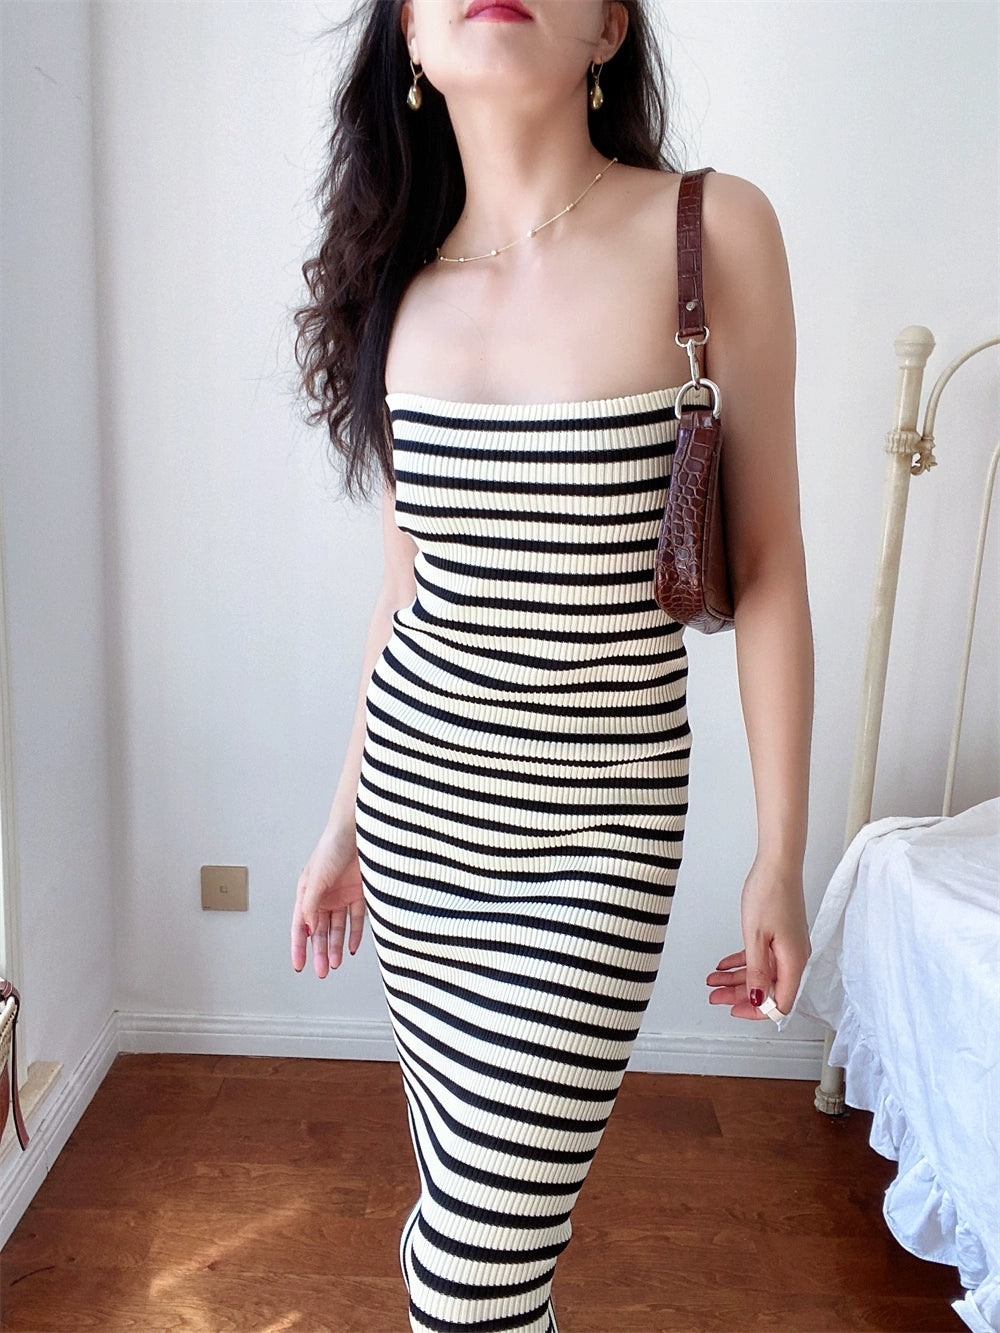 Striped Elegance: Monochrome Sheath Dress with Tube Top - Elegant & Versatile Street Style